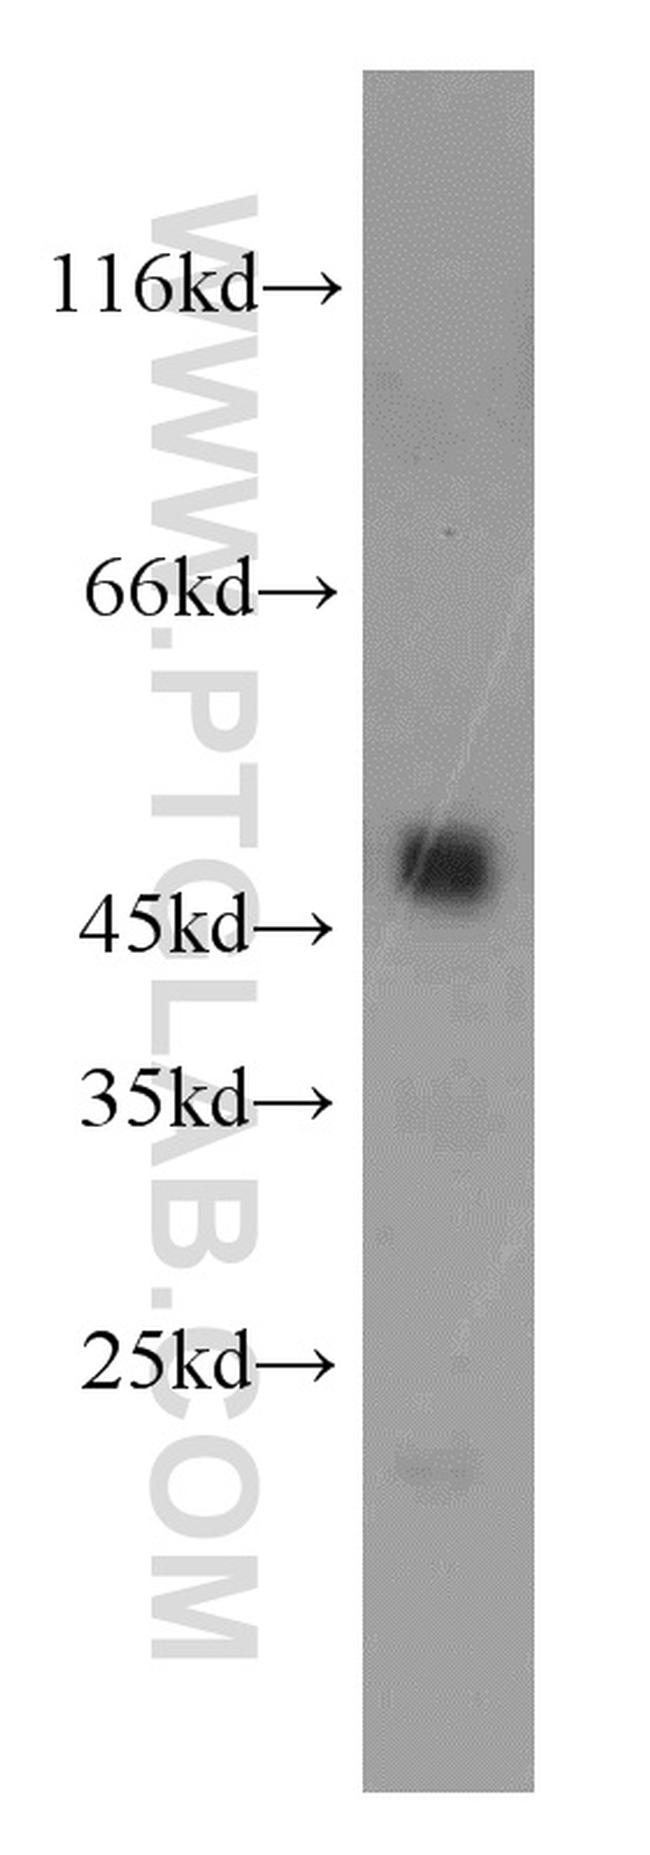 CPB1 Antibody in Western Blot (WB)